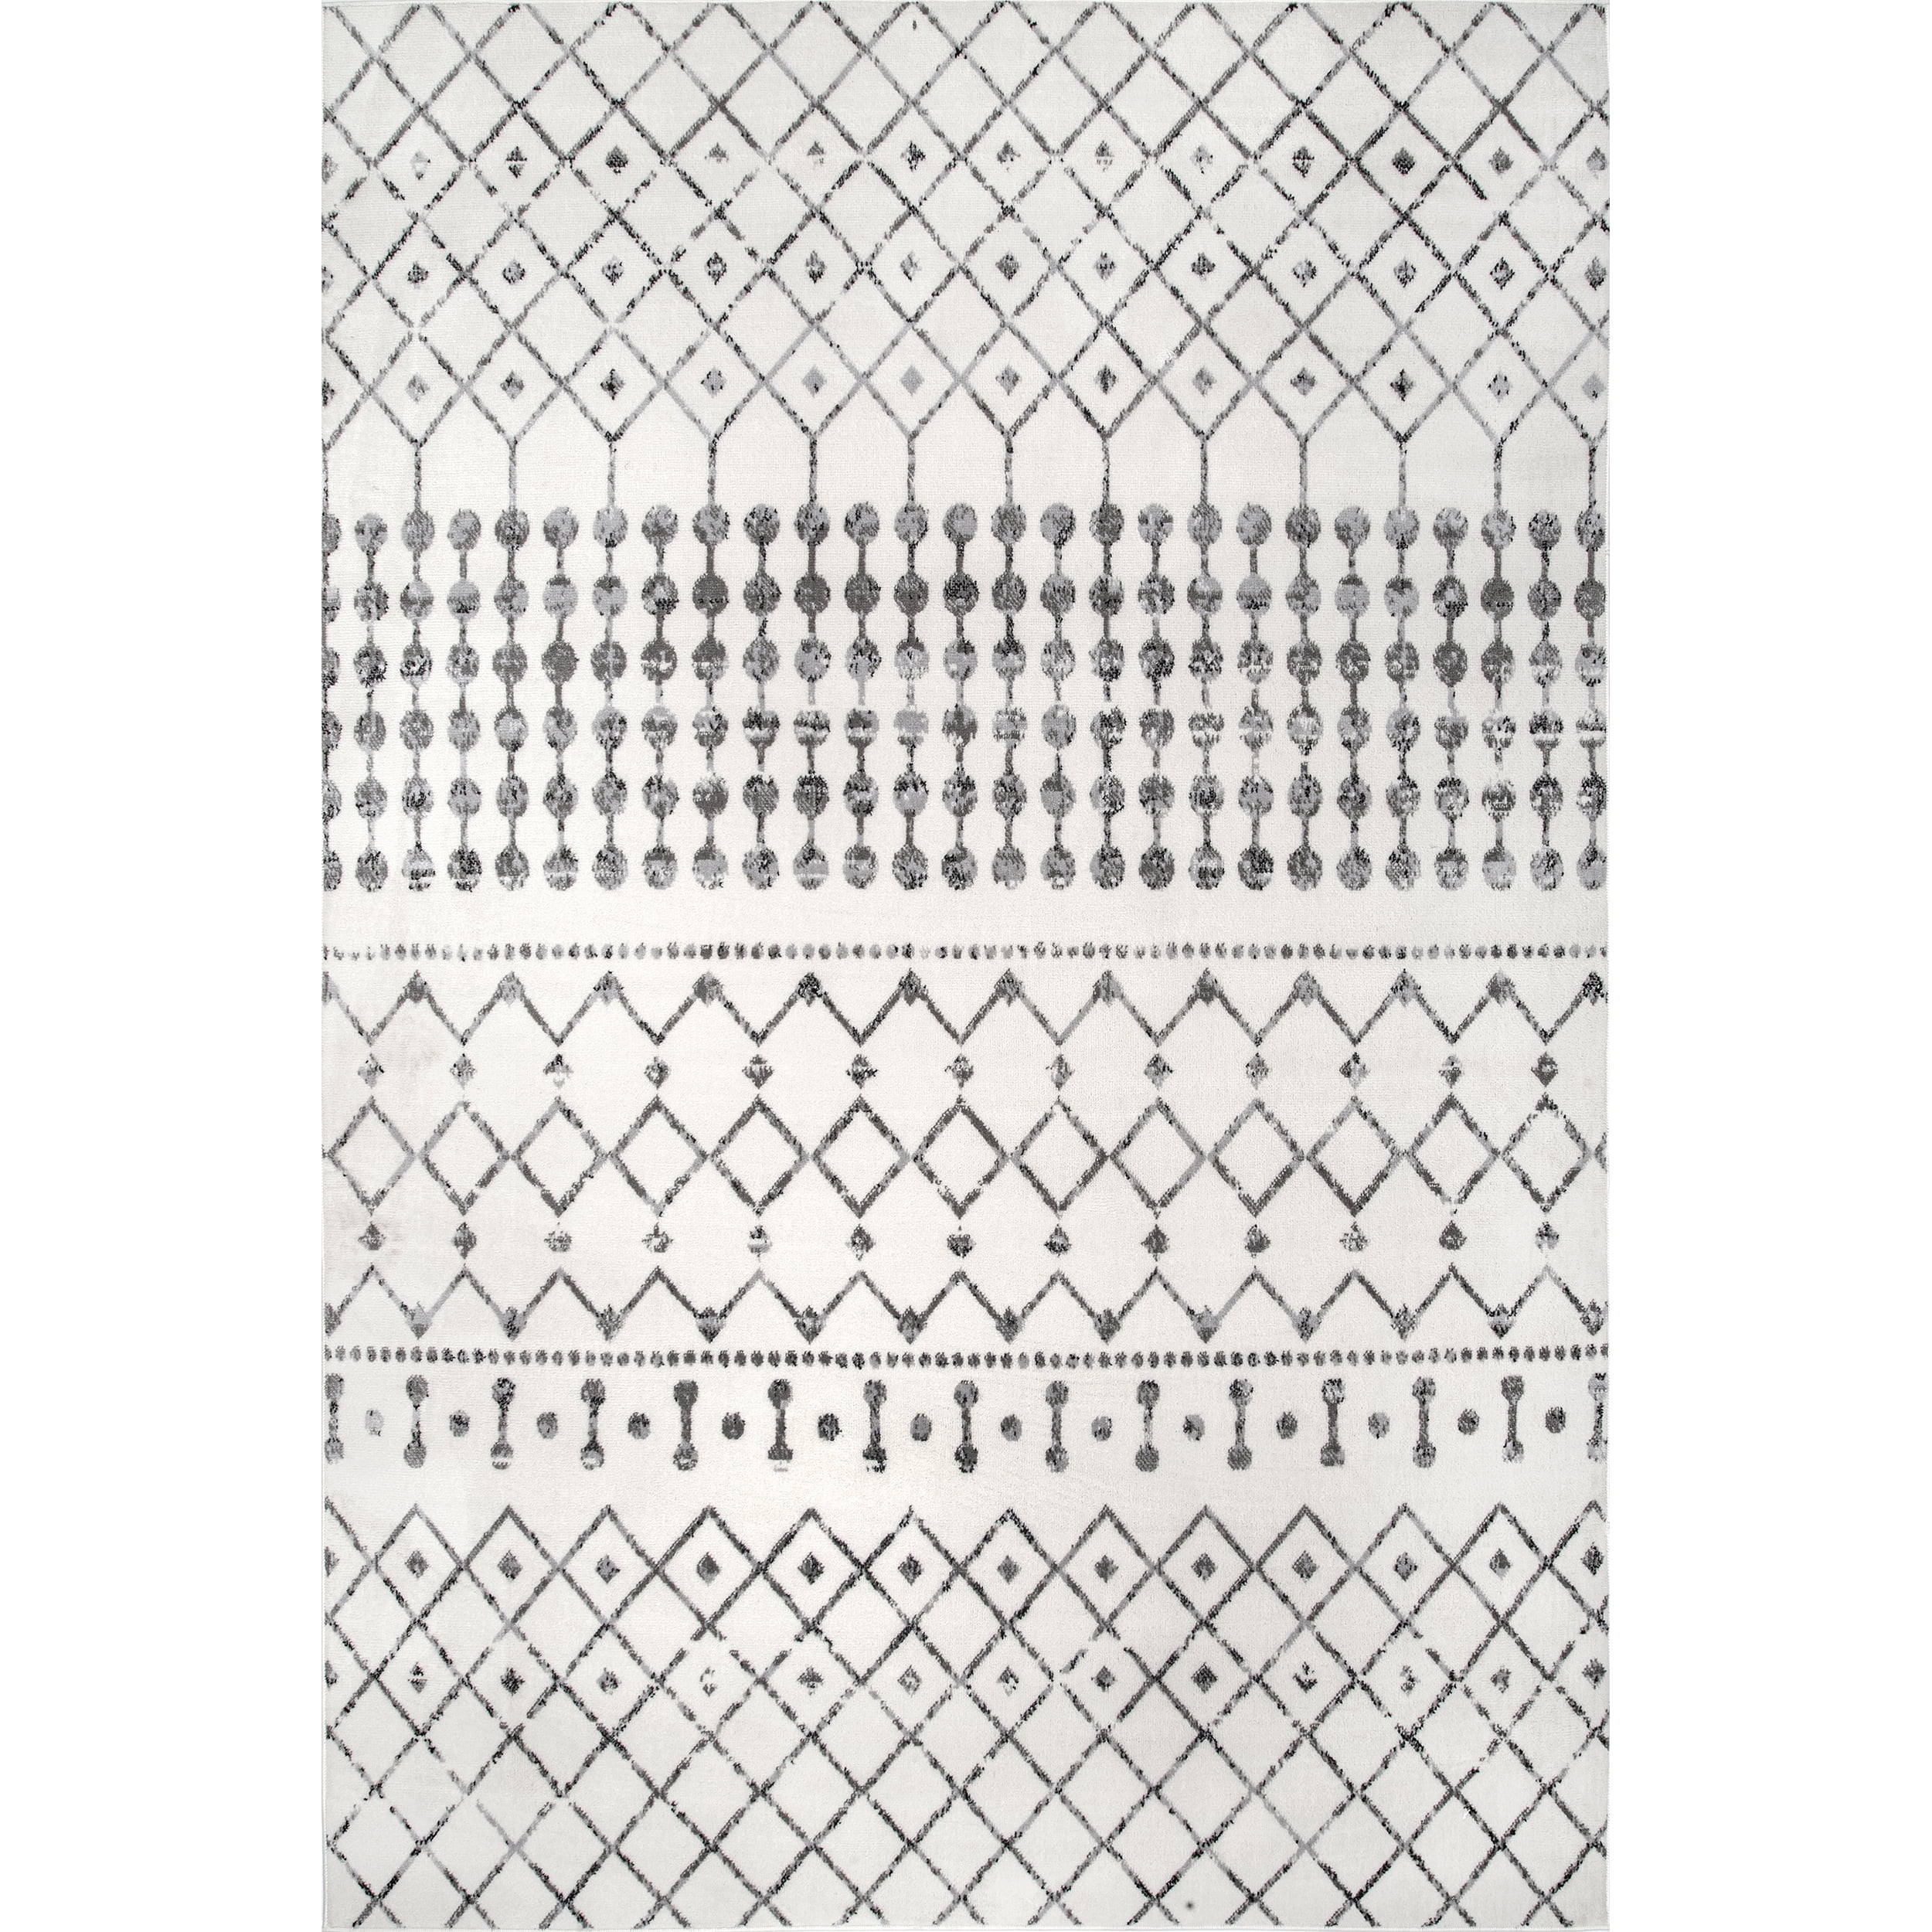 5' x 8' nuLOOM Zola Geometric Moroccan Area Rug (Grey) $34 + Free Shipping